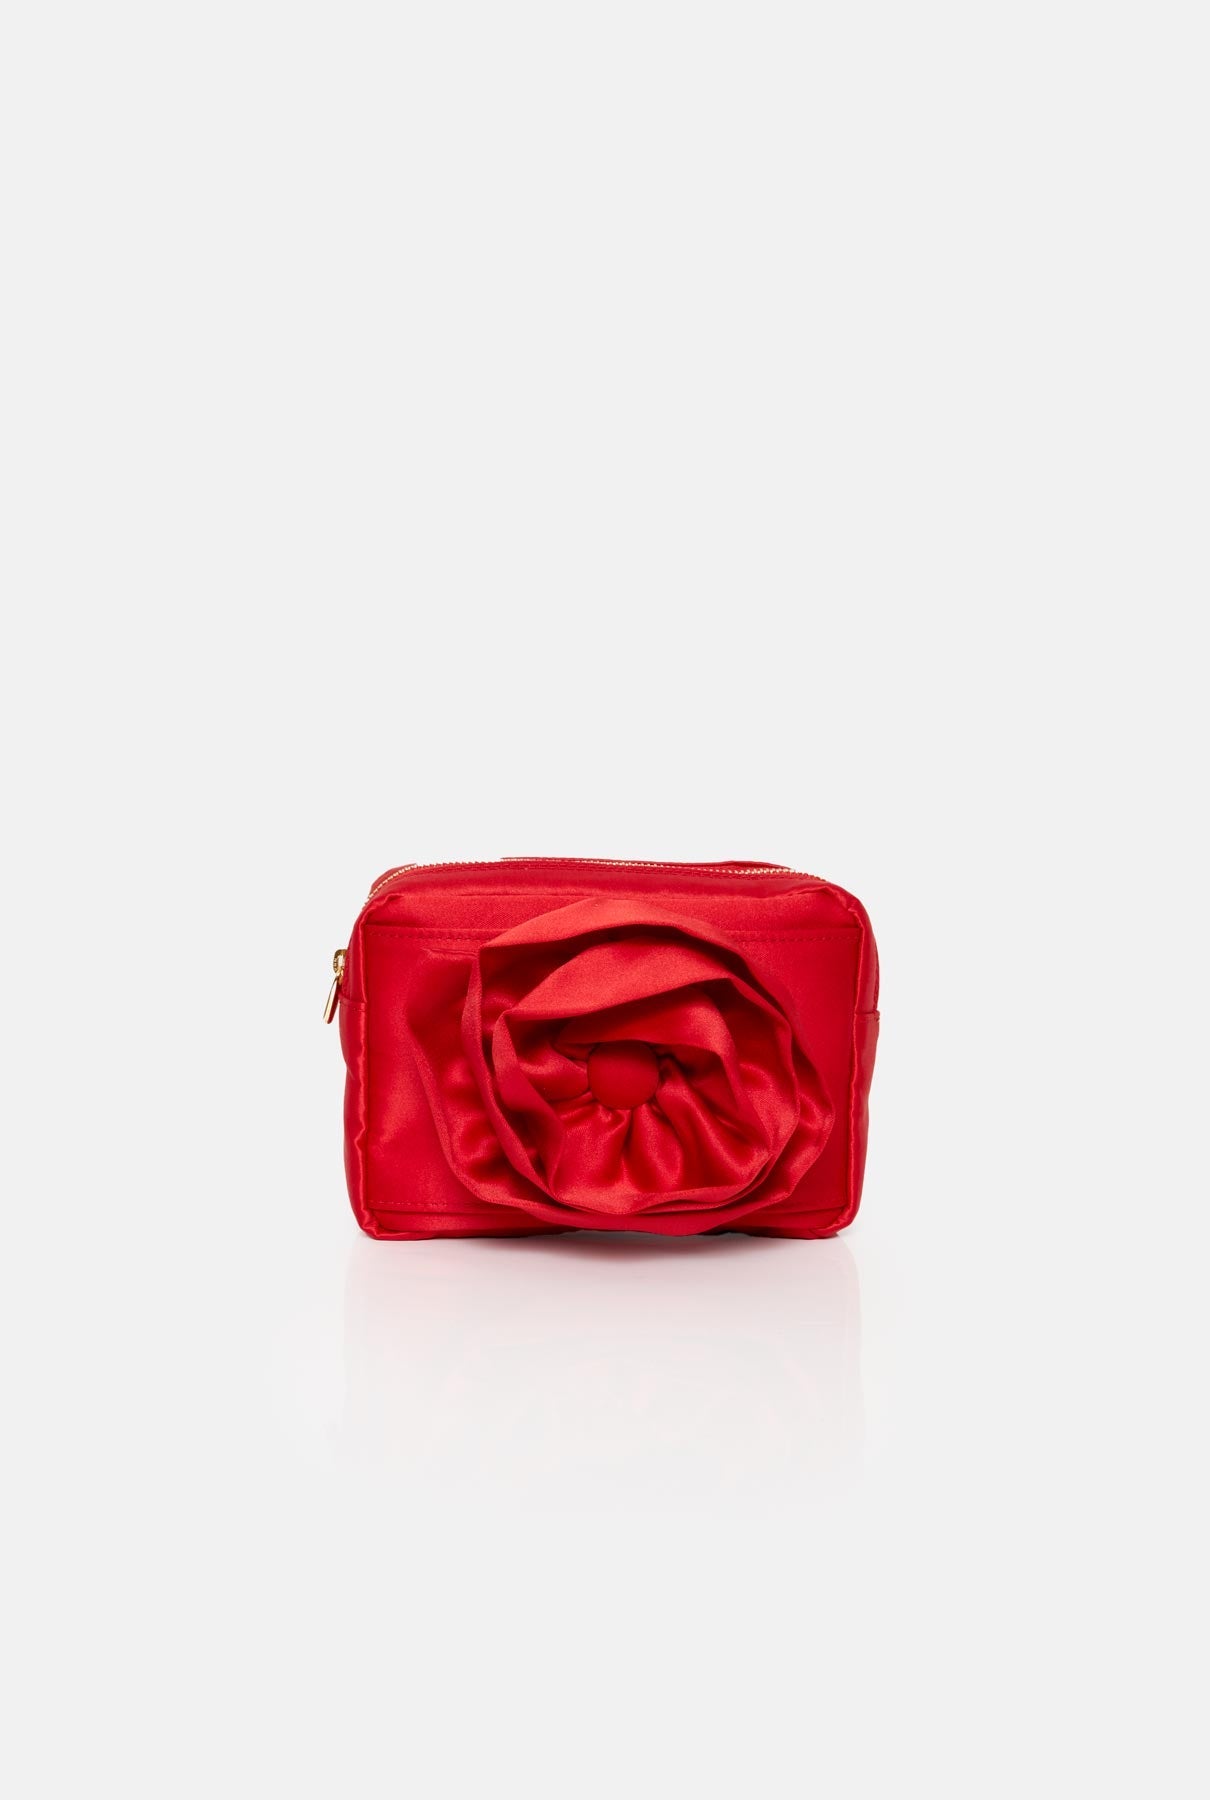 Pulseta bag Rose Red Hand bags Celina Martin 